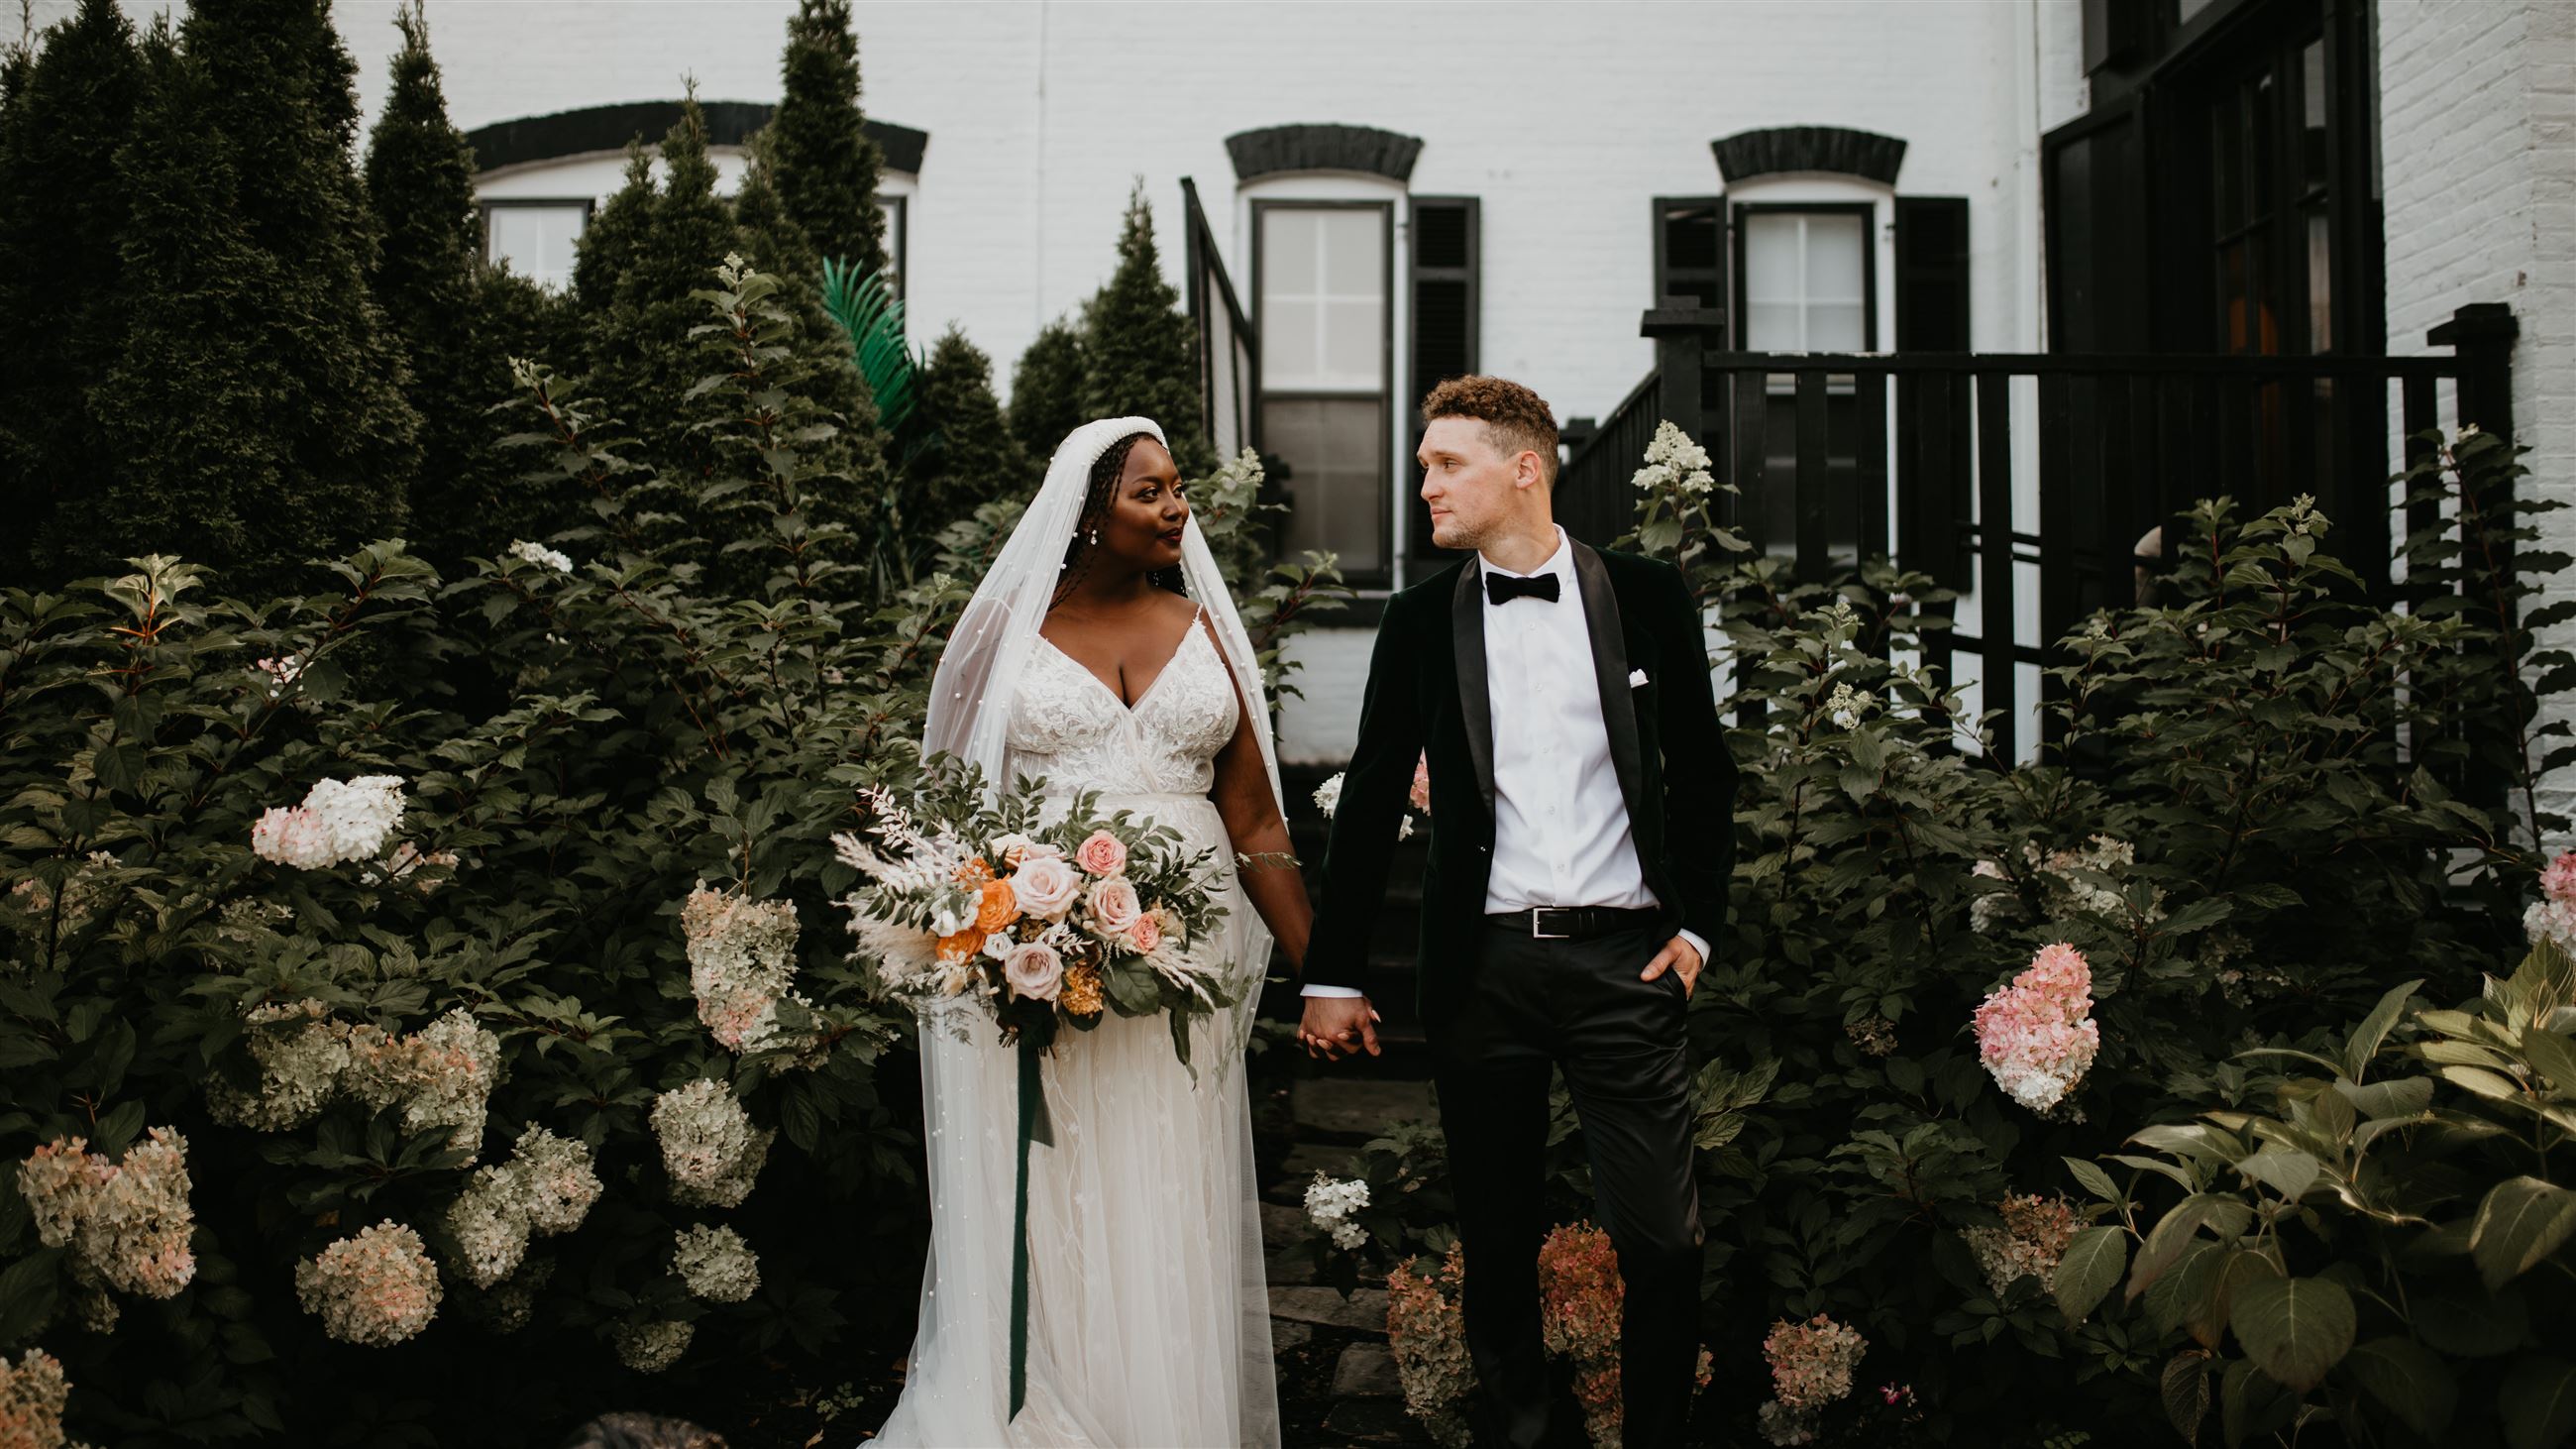 Sophia & Connor: A Breathtaking Wedding in Lake Geneva, WI